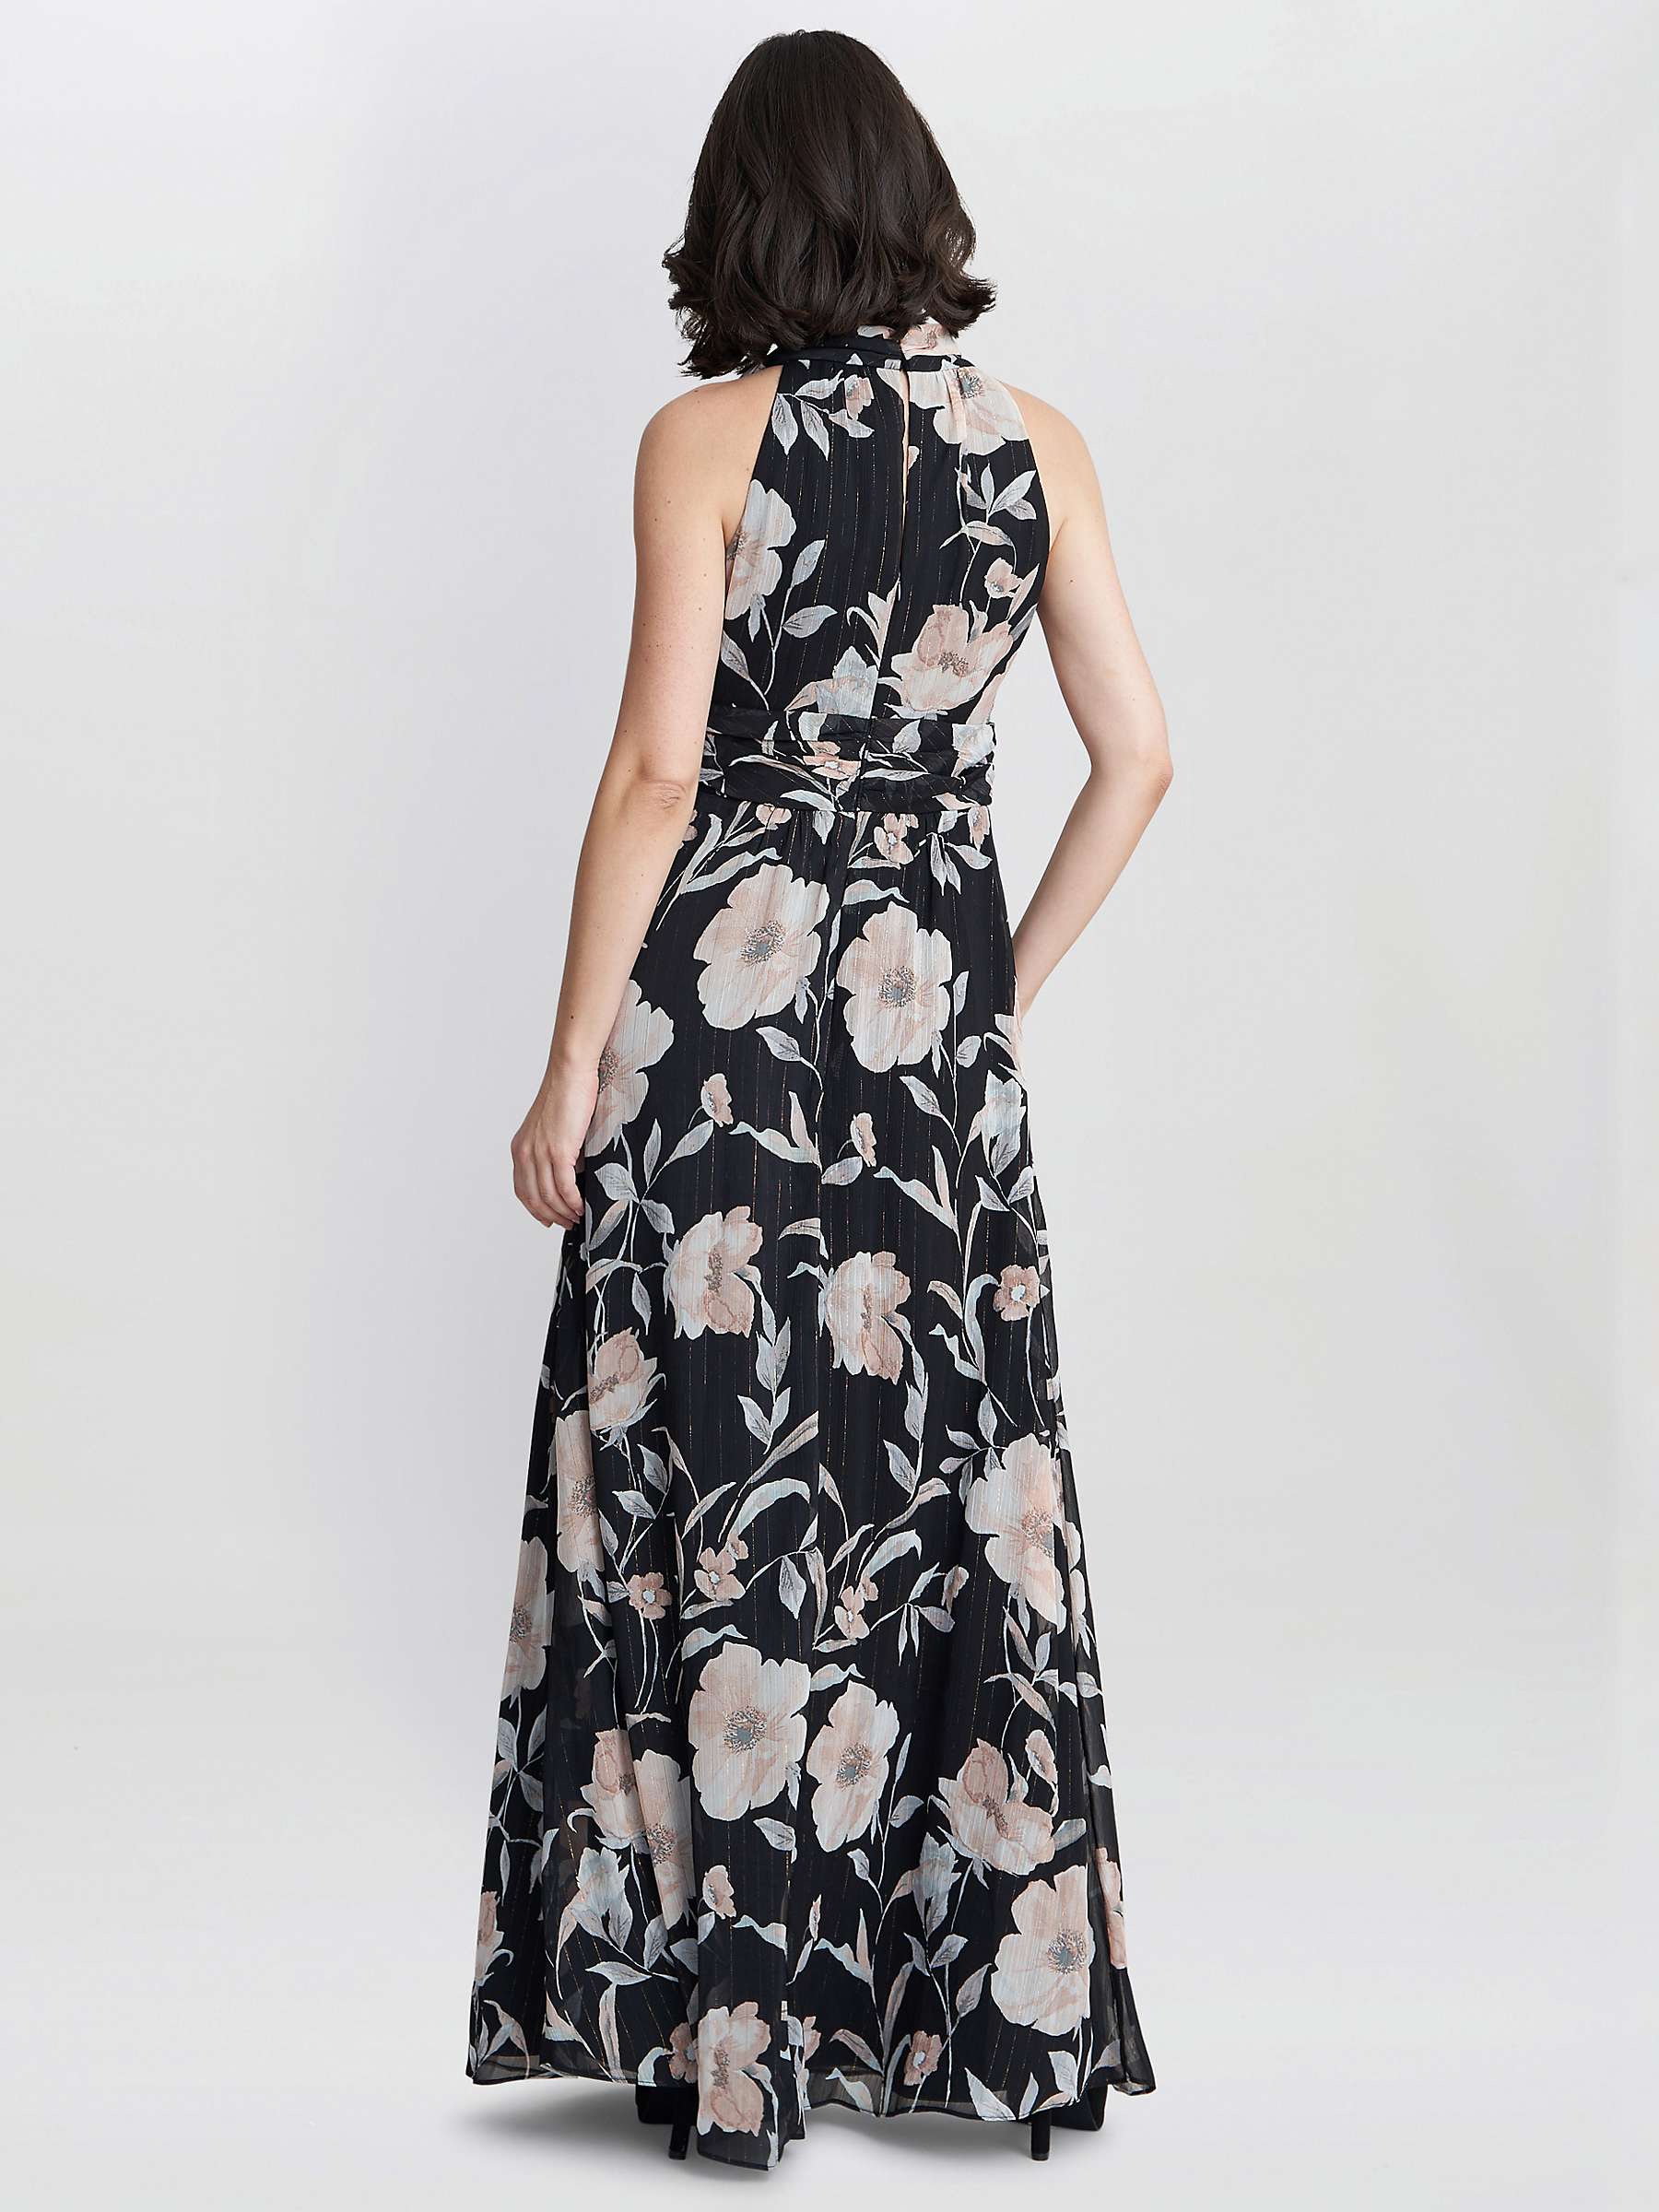 Buy Gina Bacconi Lexi Floral Print Tie Neck Maxi Dress, Black/Multi Online at johnlewis.com